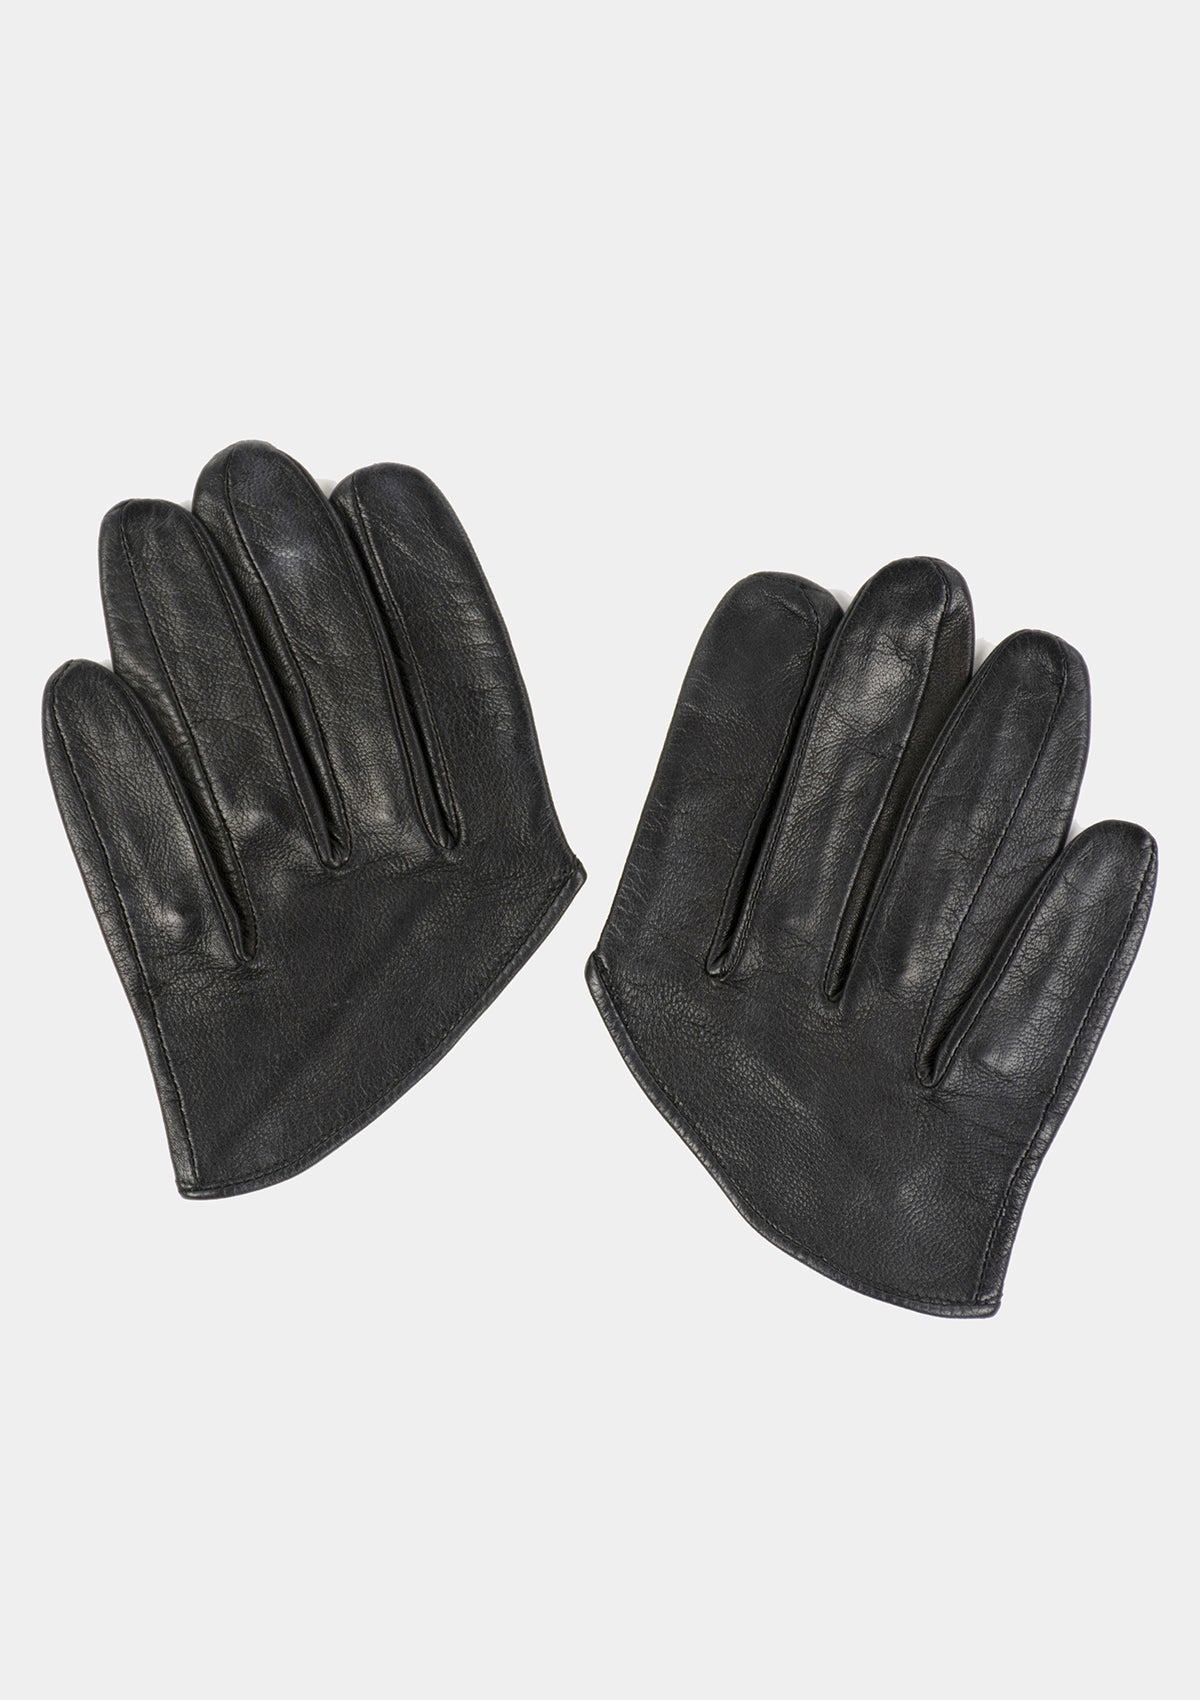 Cropped Finger Gloves Women Black Leather